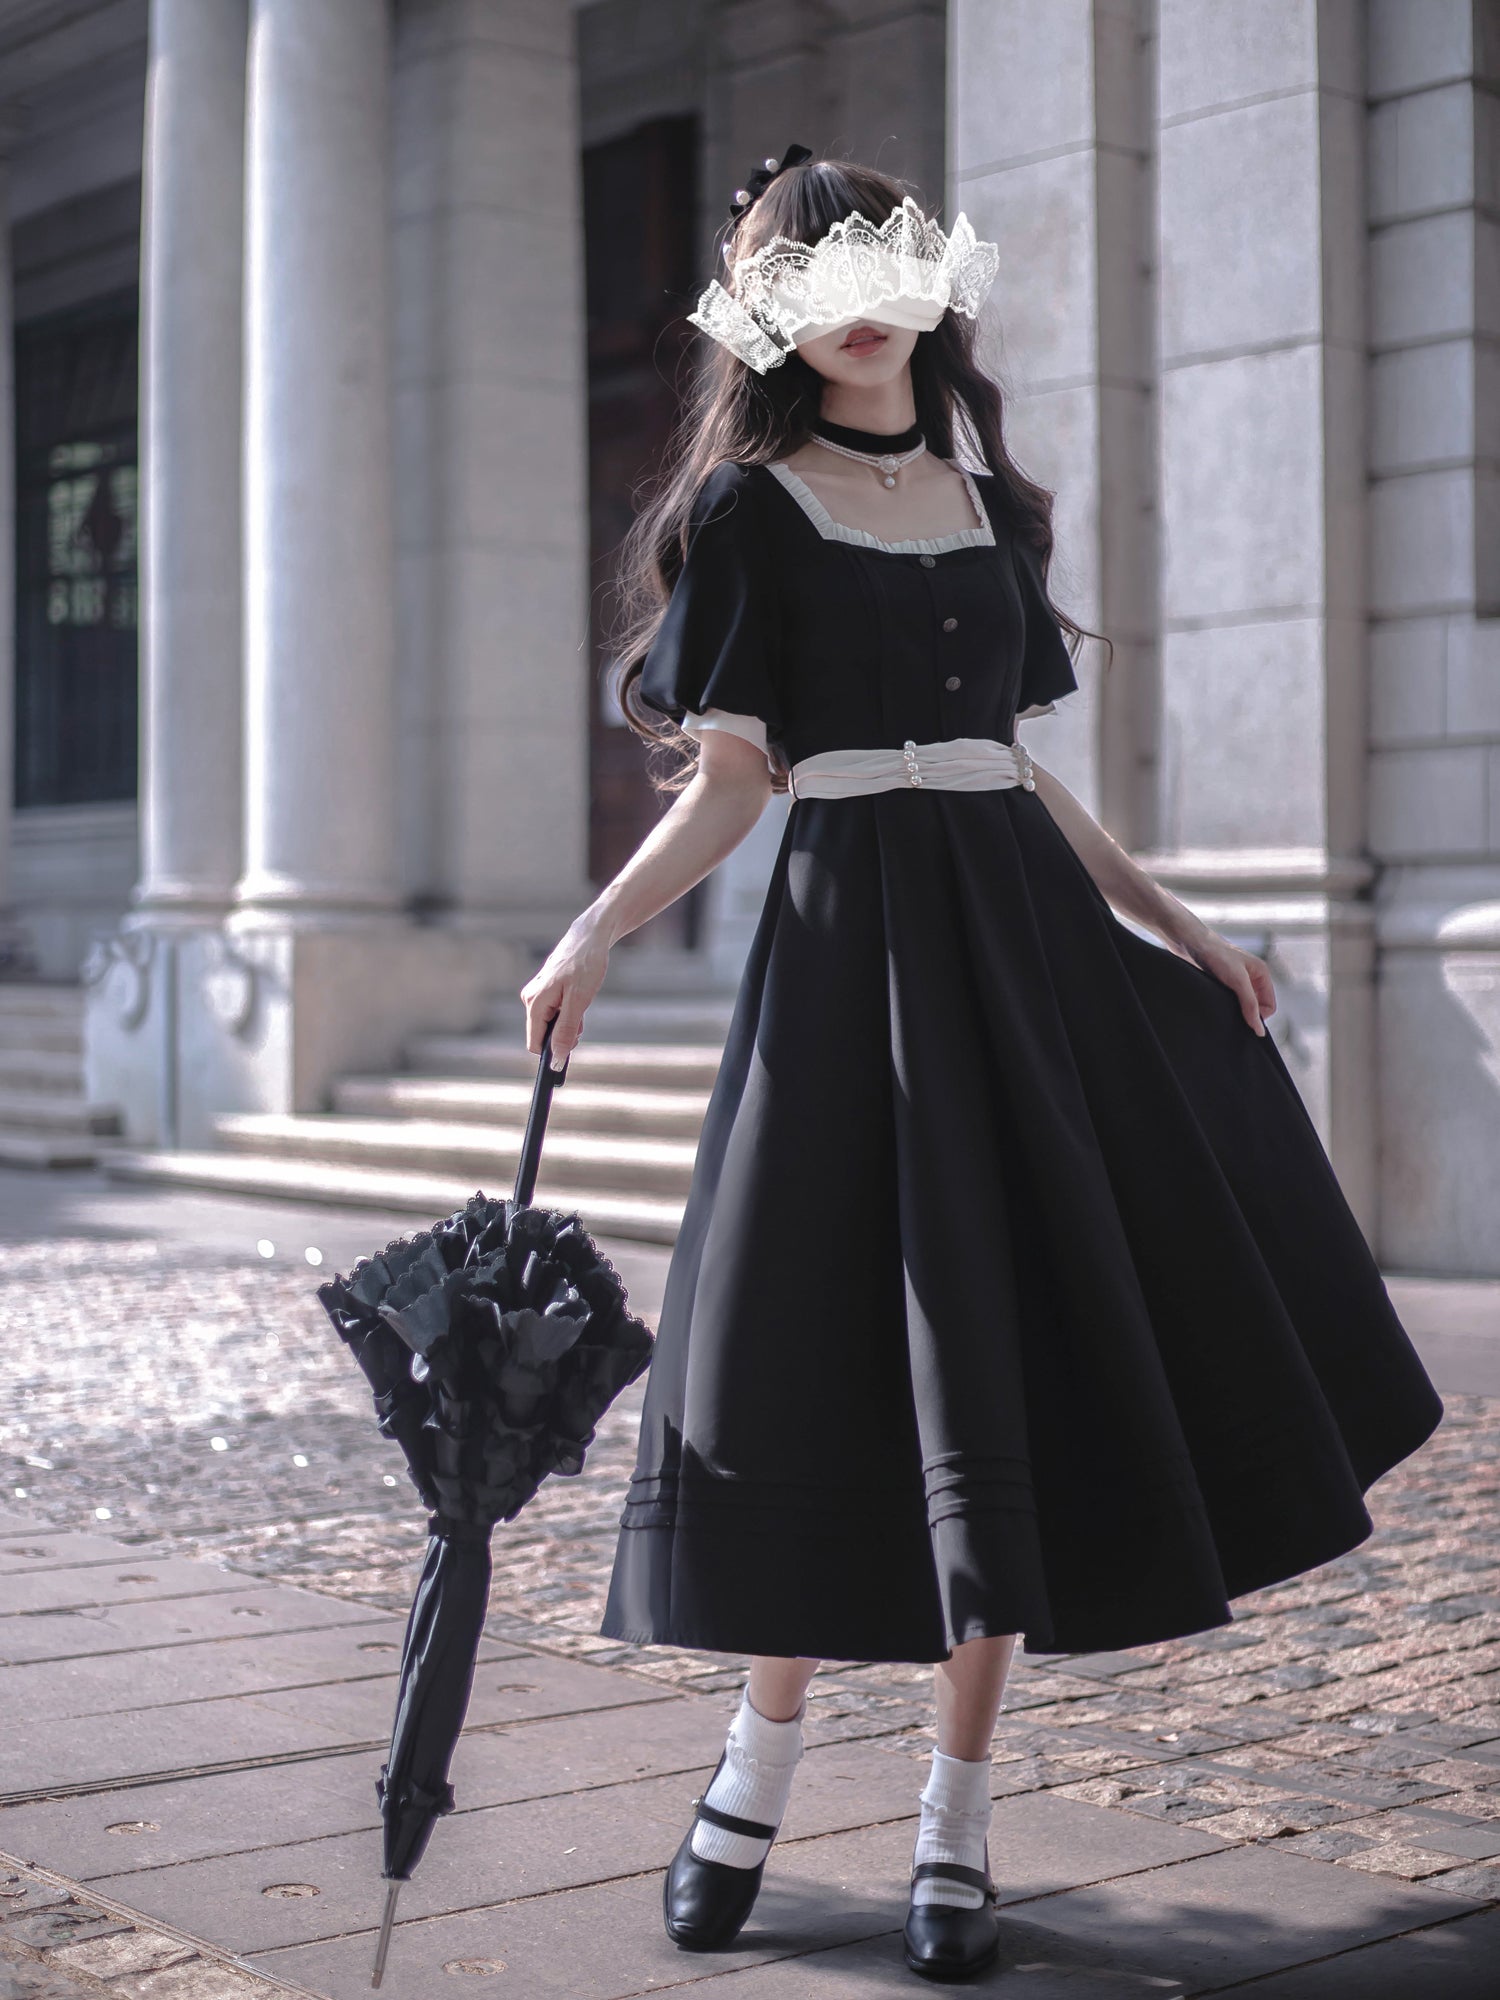 jet-black lady Literary classical dress